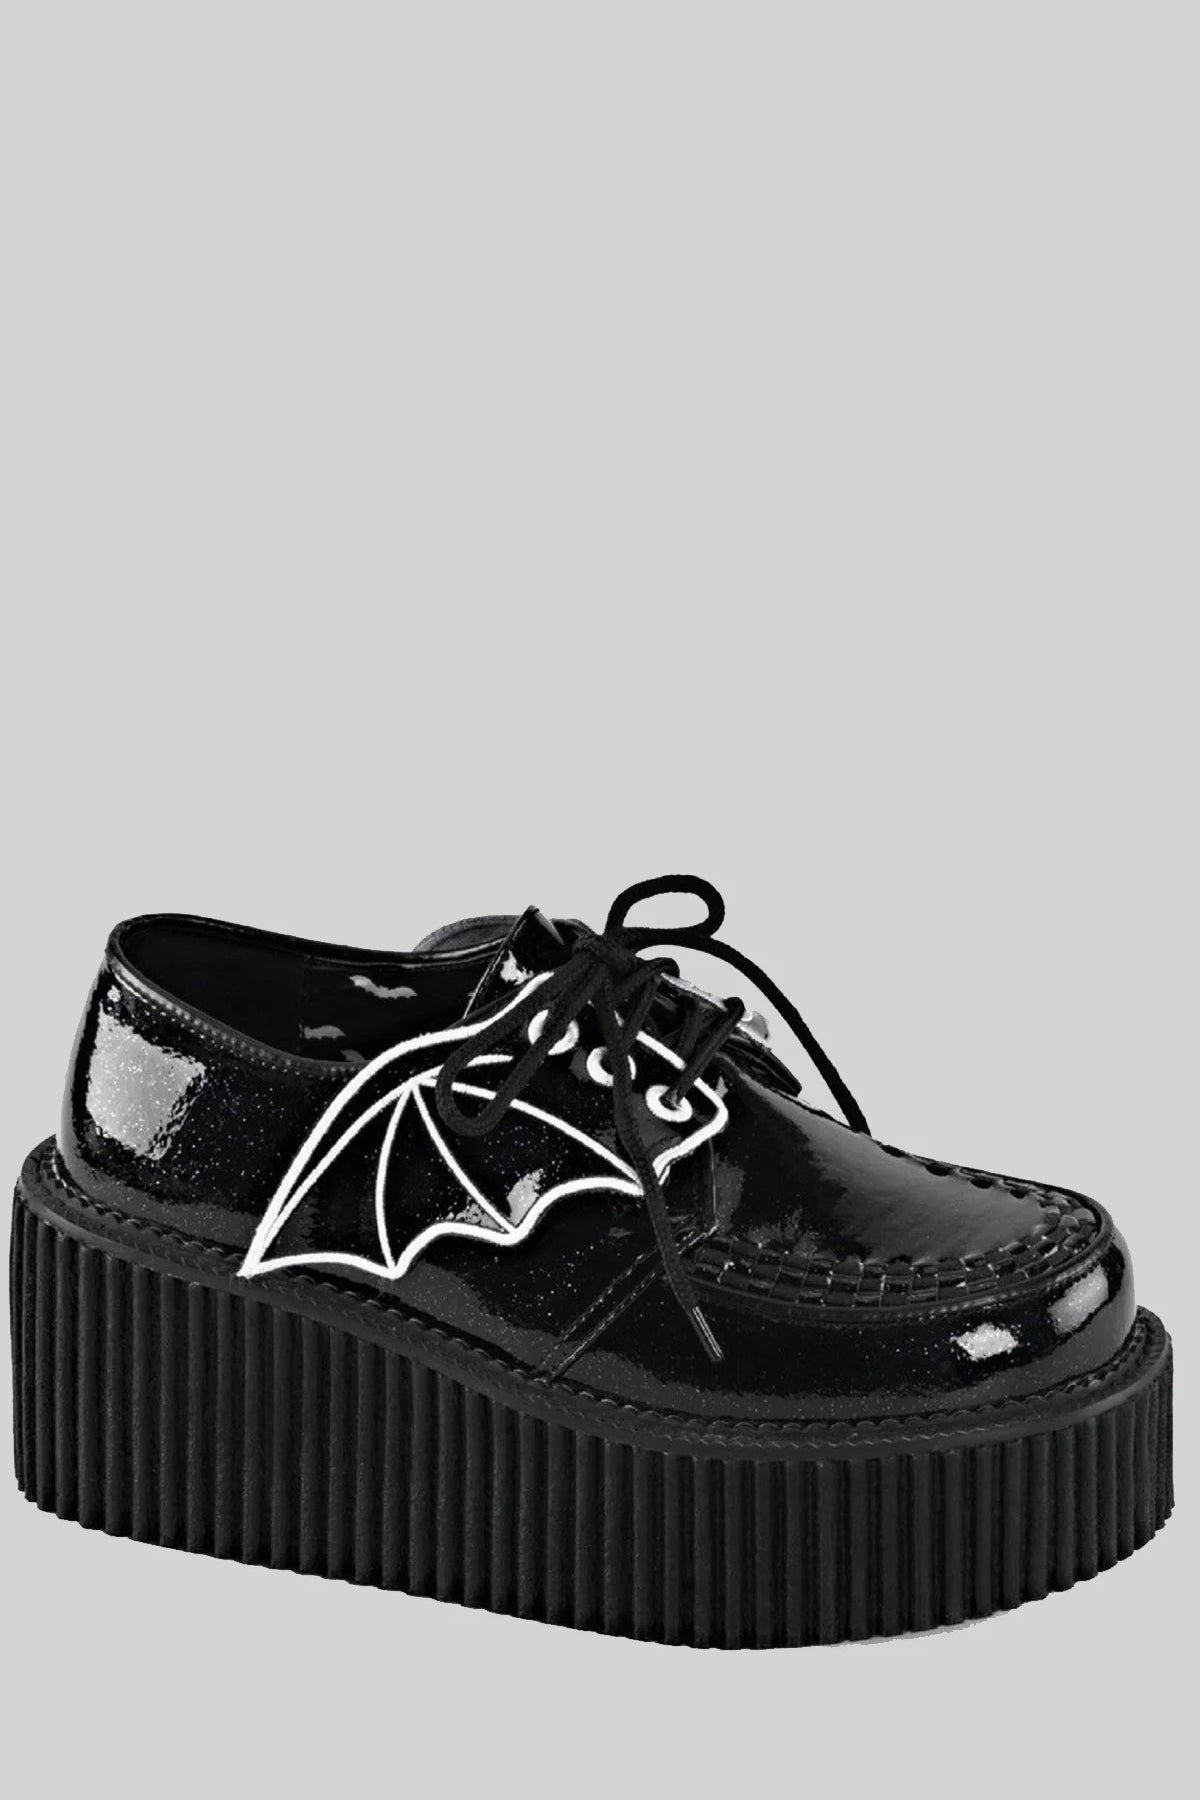 Demonia Creeper 205 Glitter Vinyl Bat Wings Platform Shoes